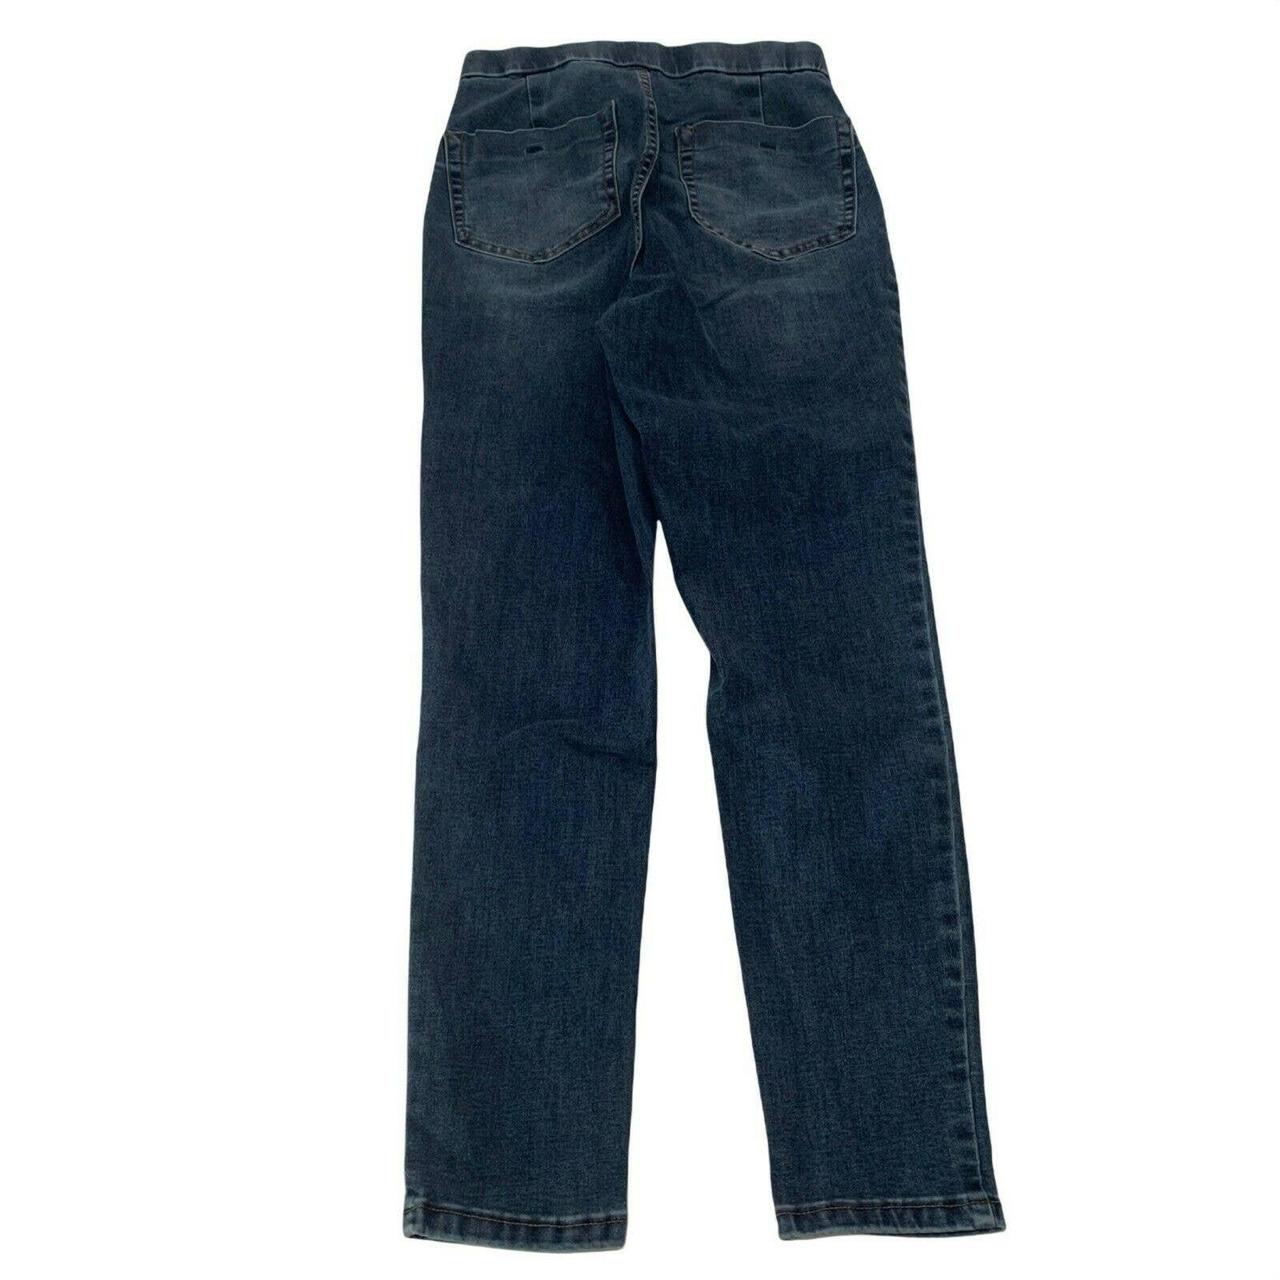 No Boundaries Jeans Super high rise skinny jeans - Depop